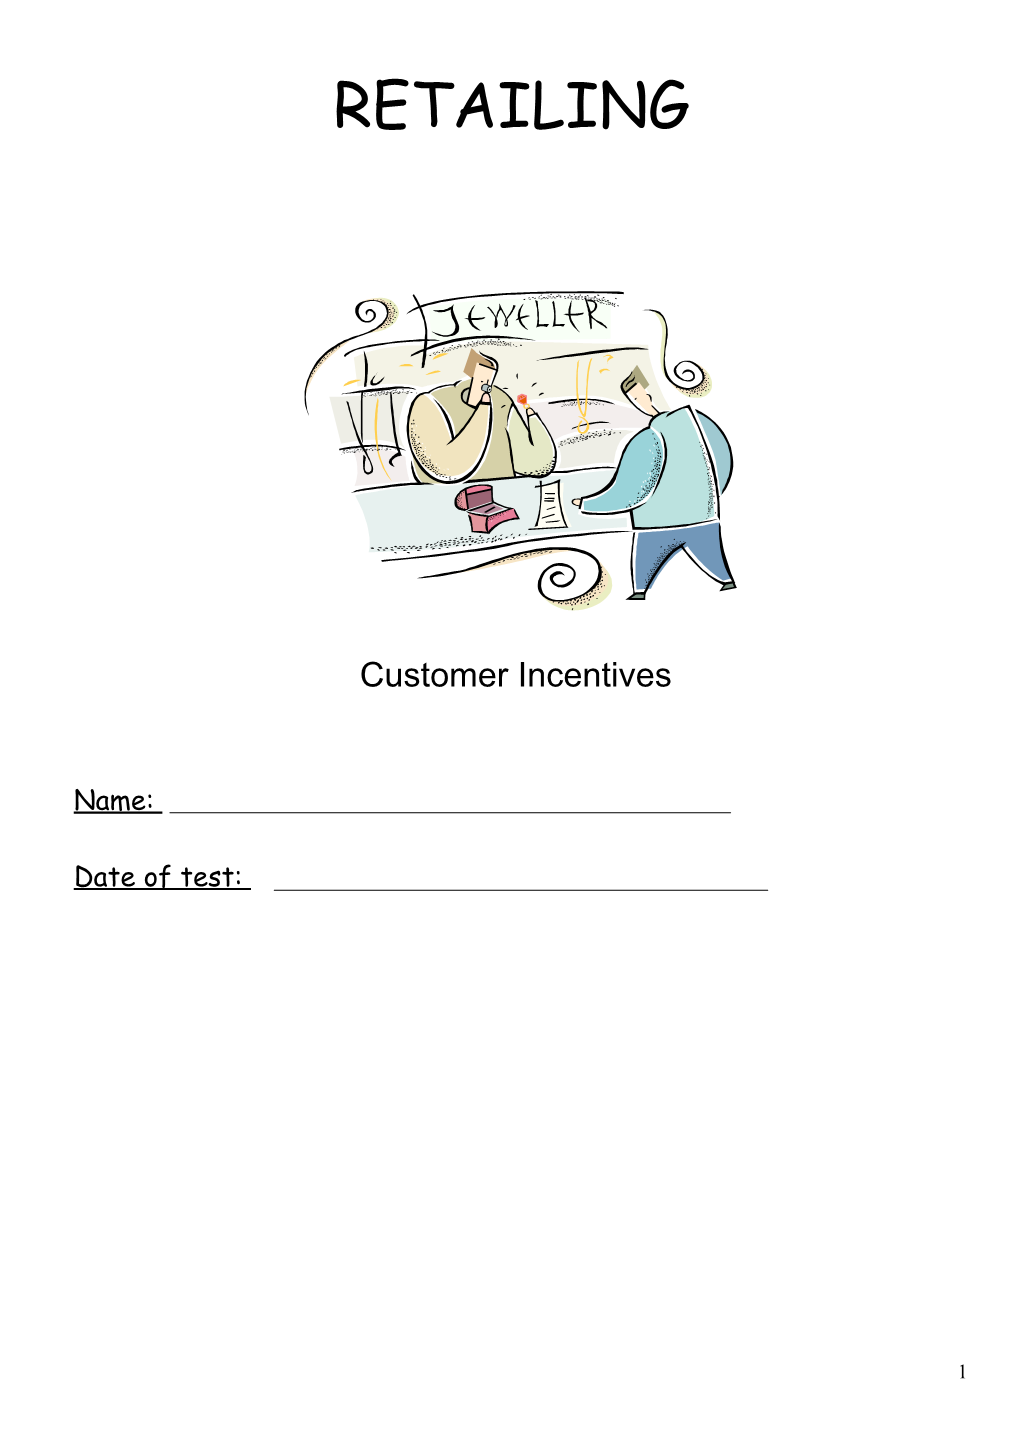 Customer Incentives